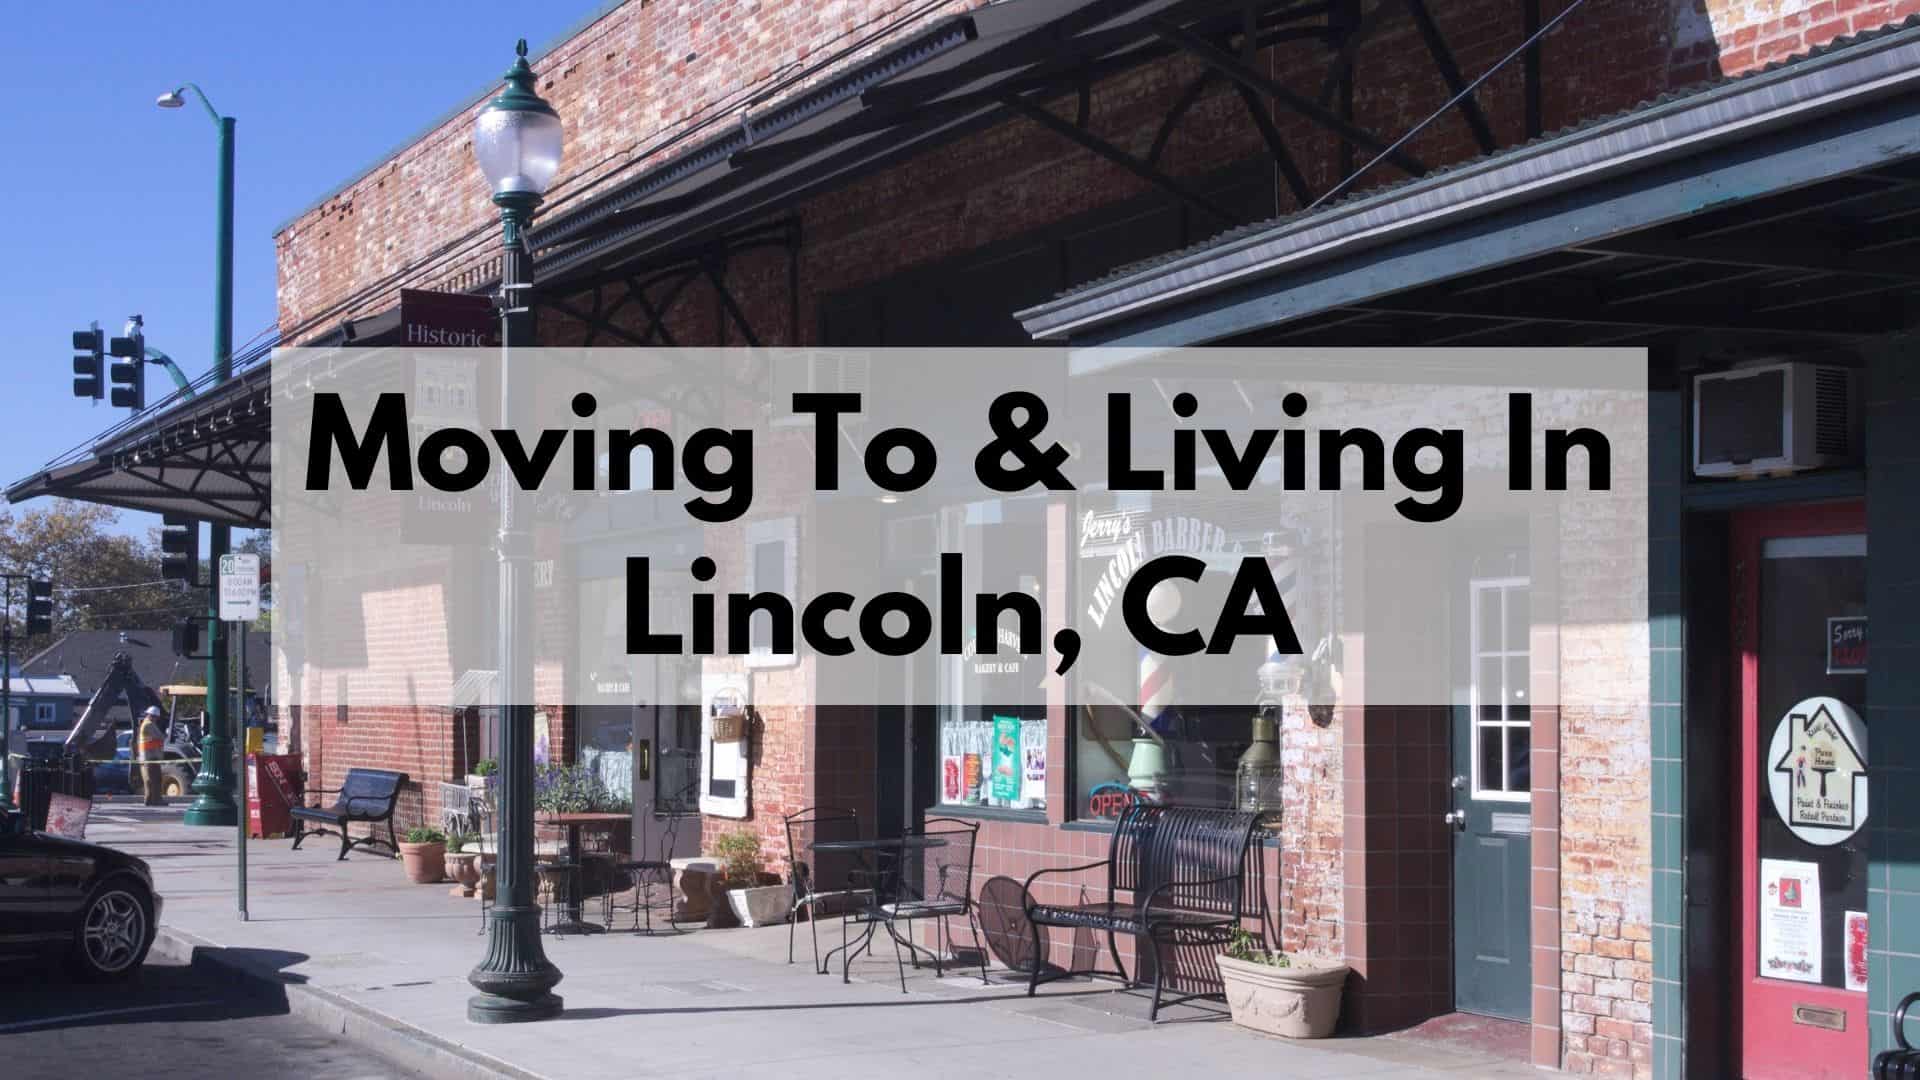 Small businesses located in Lincoln CA